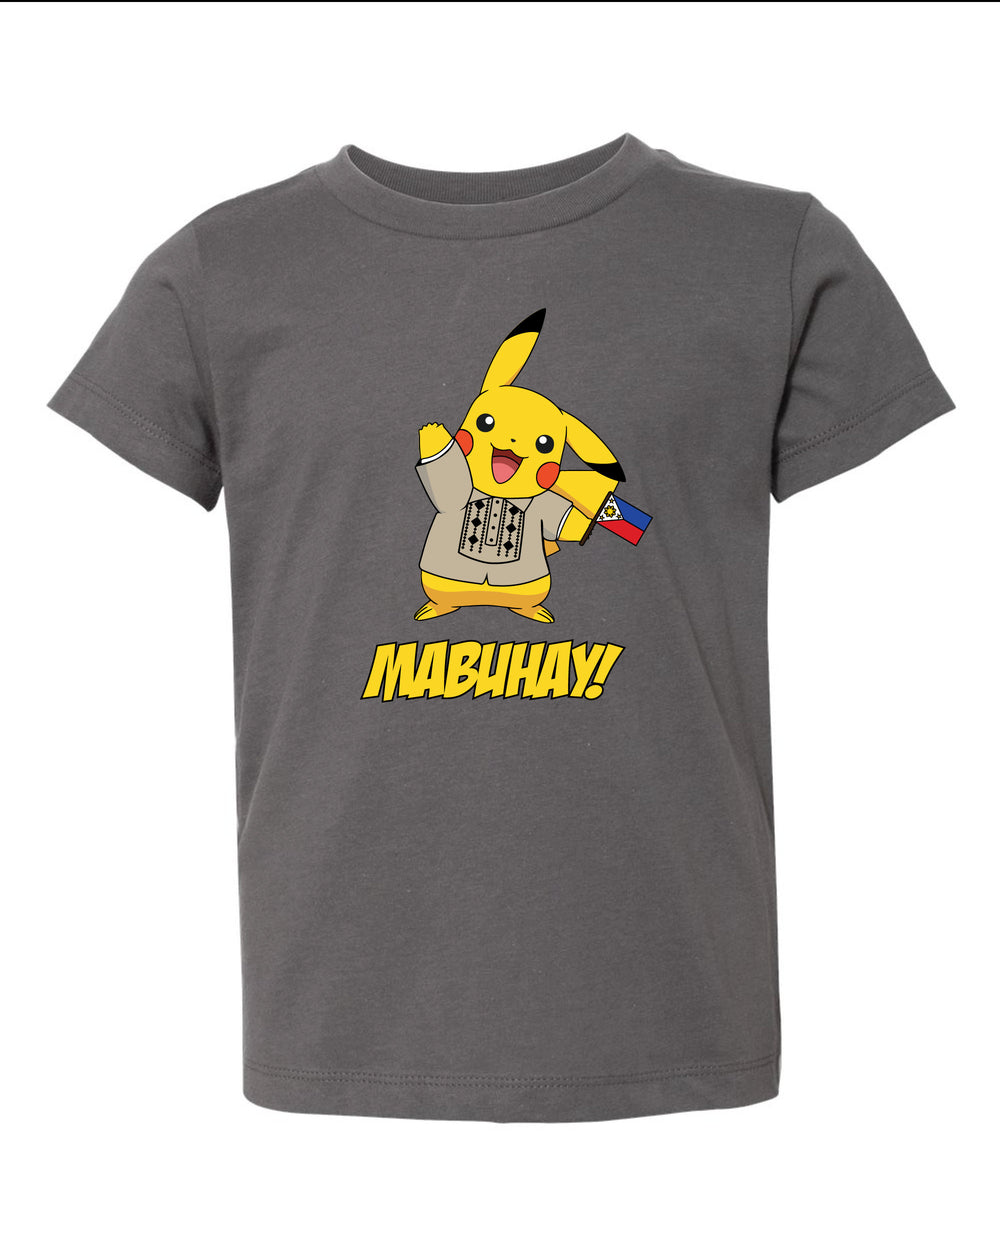 Toddler/Kids Mabuhay Pikachu Shirt, Kids T-Shirt, Filipino Apparels